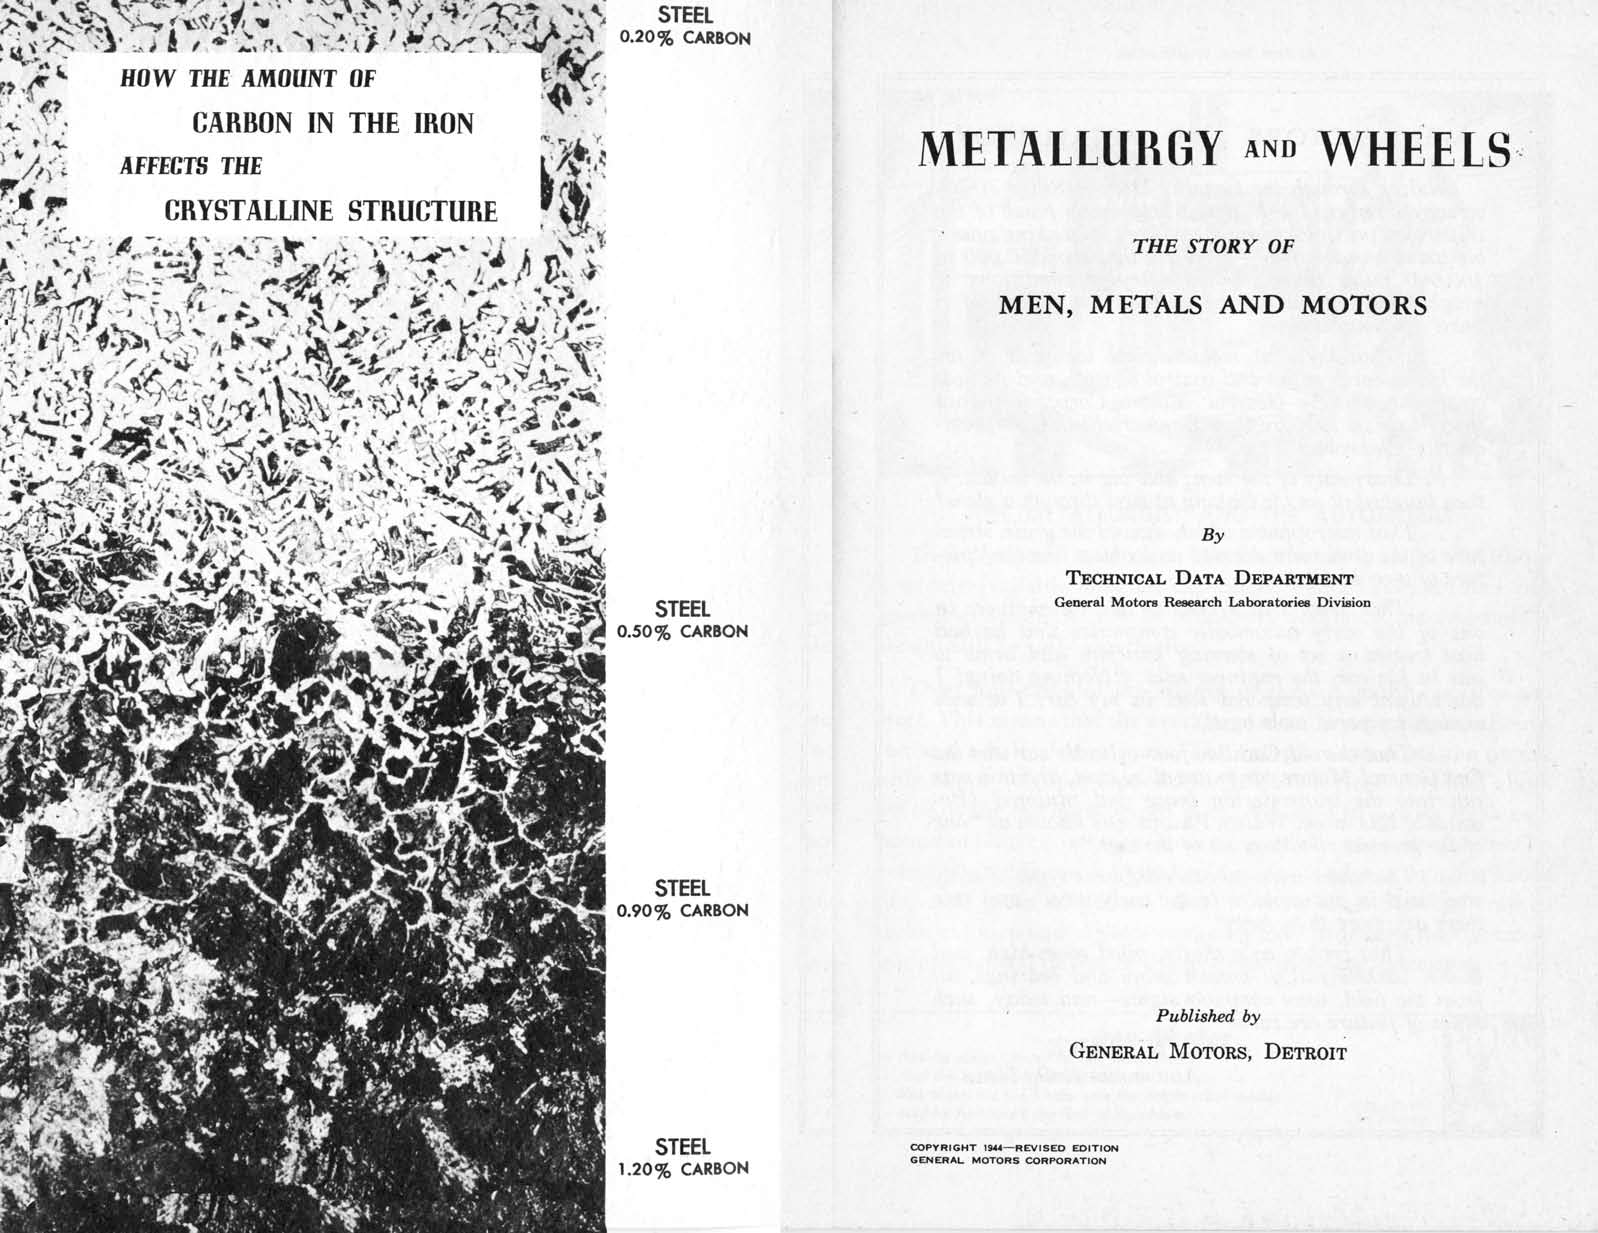 n_1944-Metallurgy and Wheels-00a-01.jpg